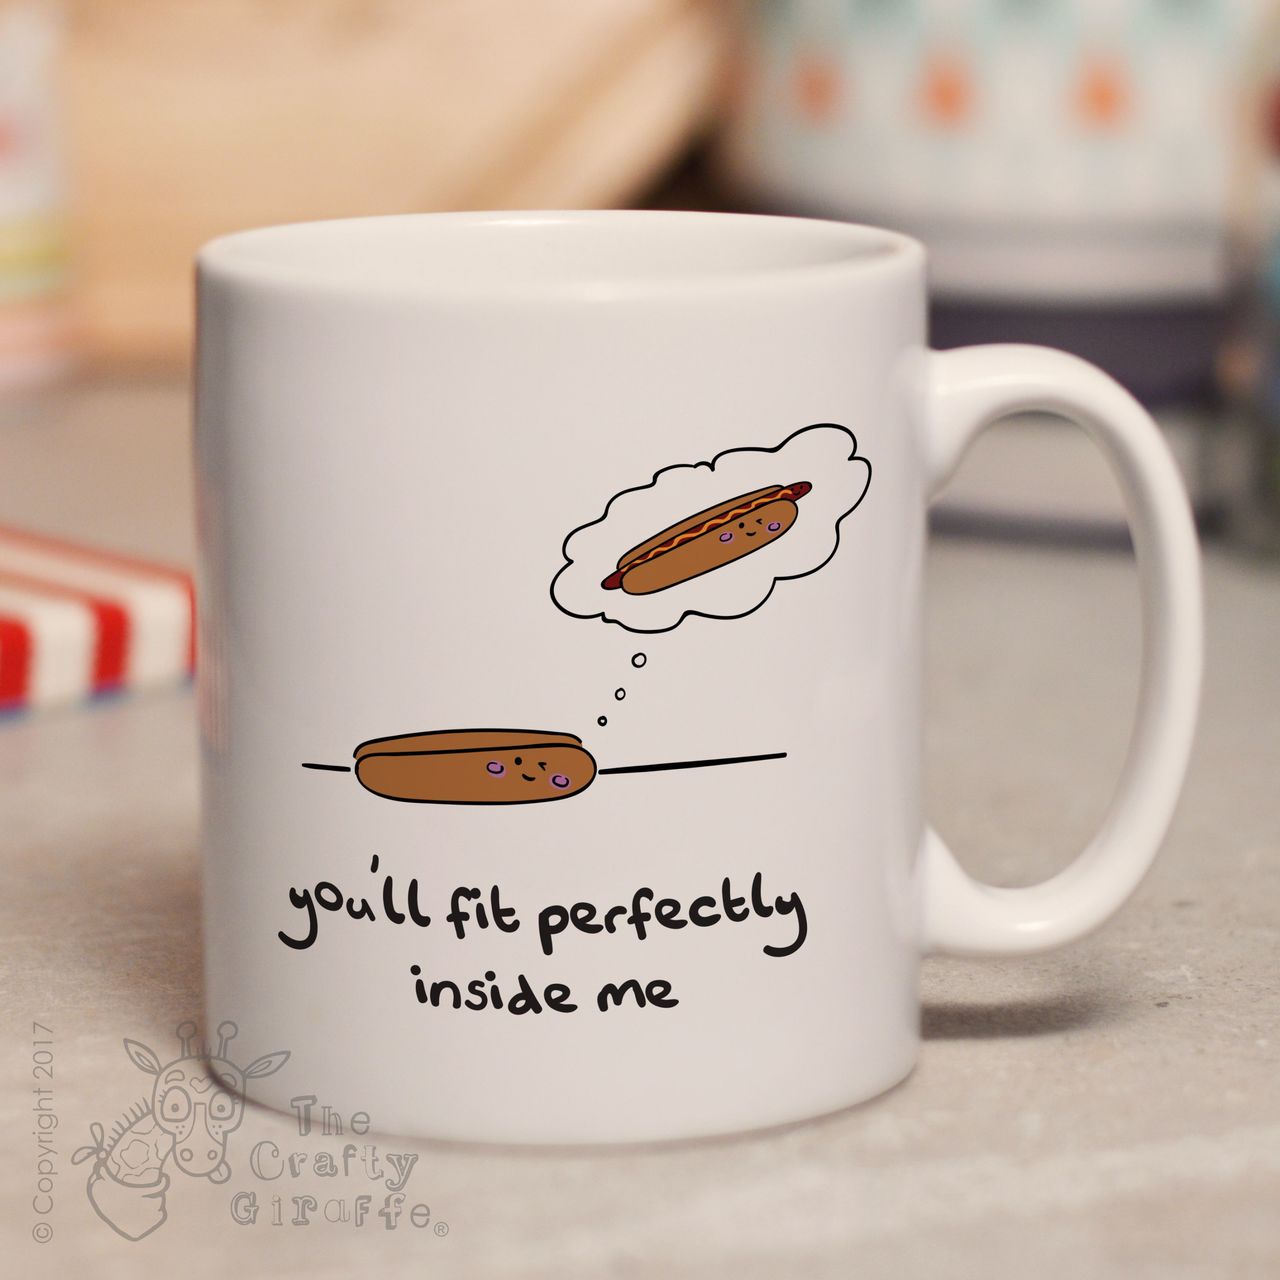 You’ll fit perfectly inside me mug